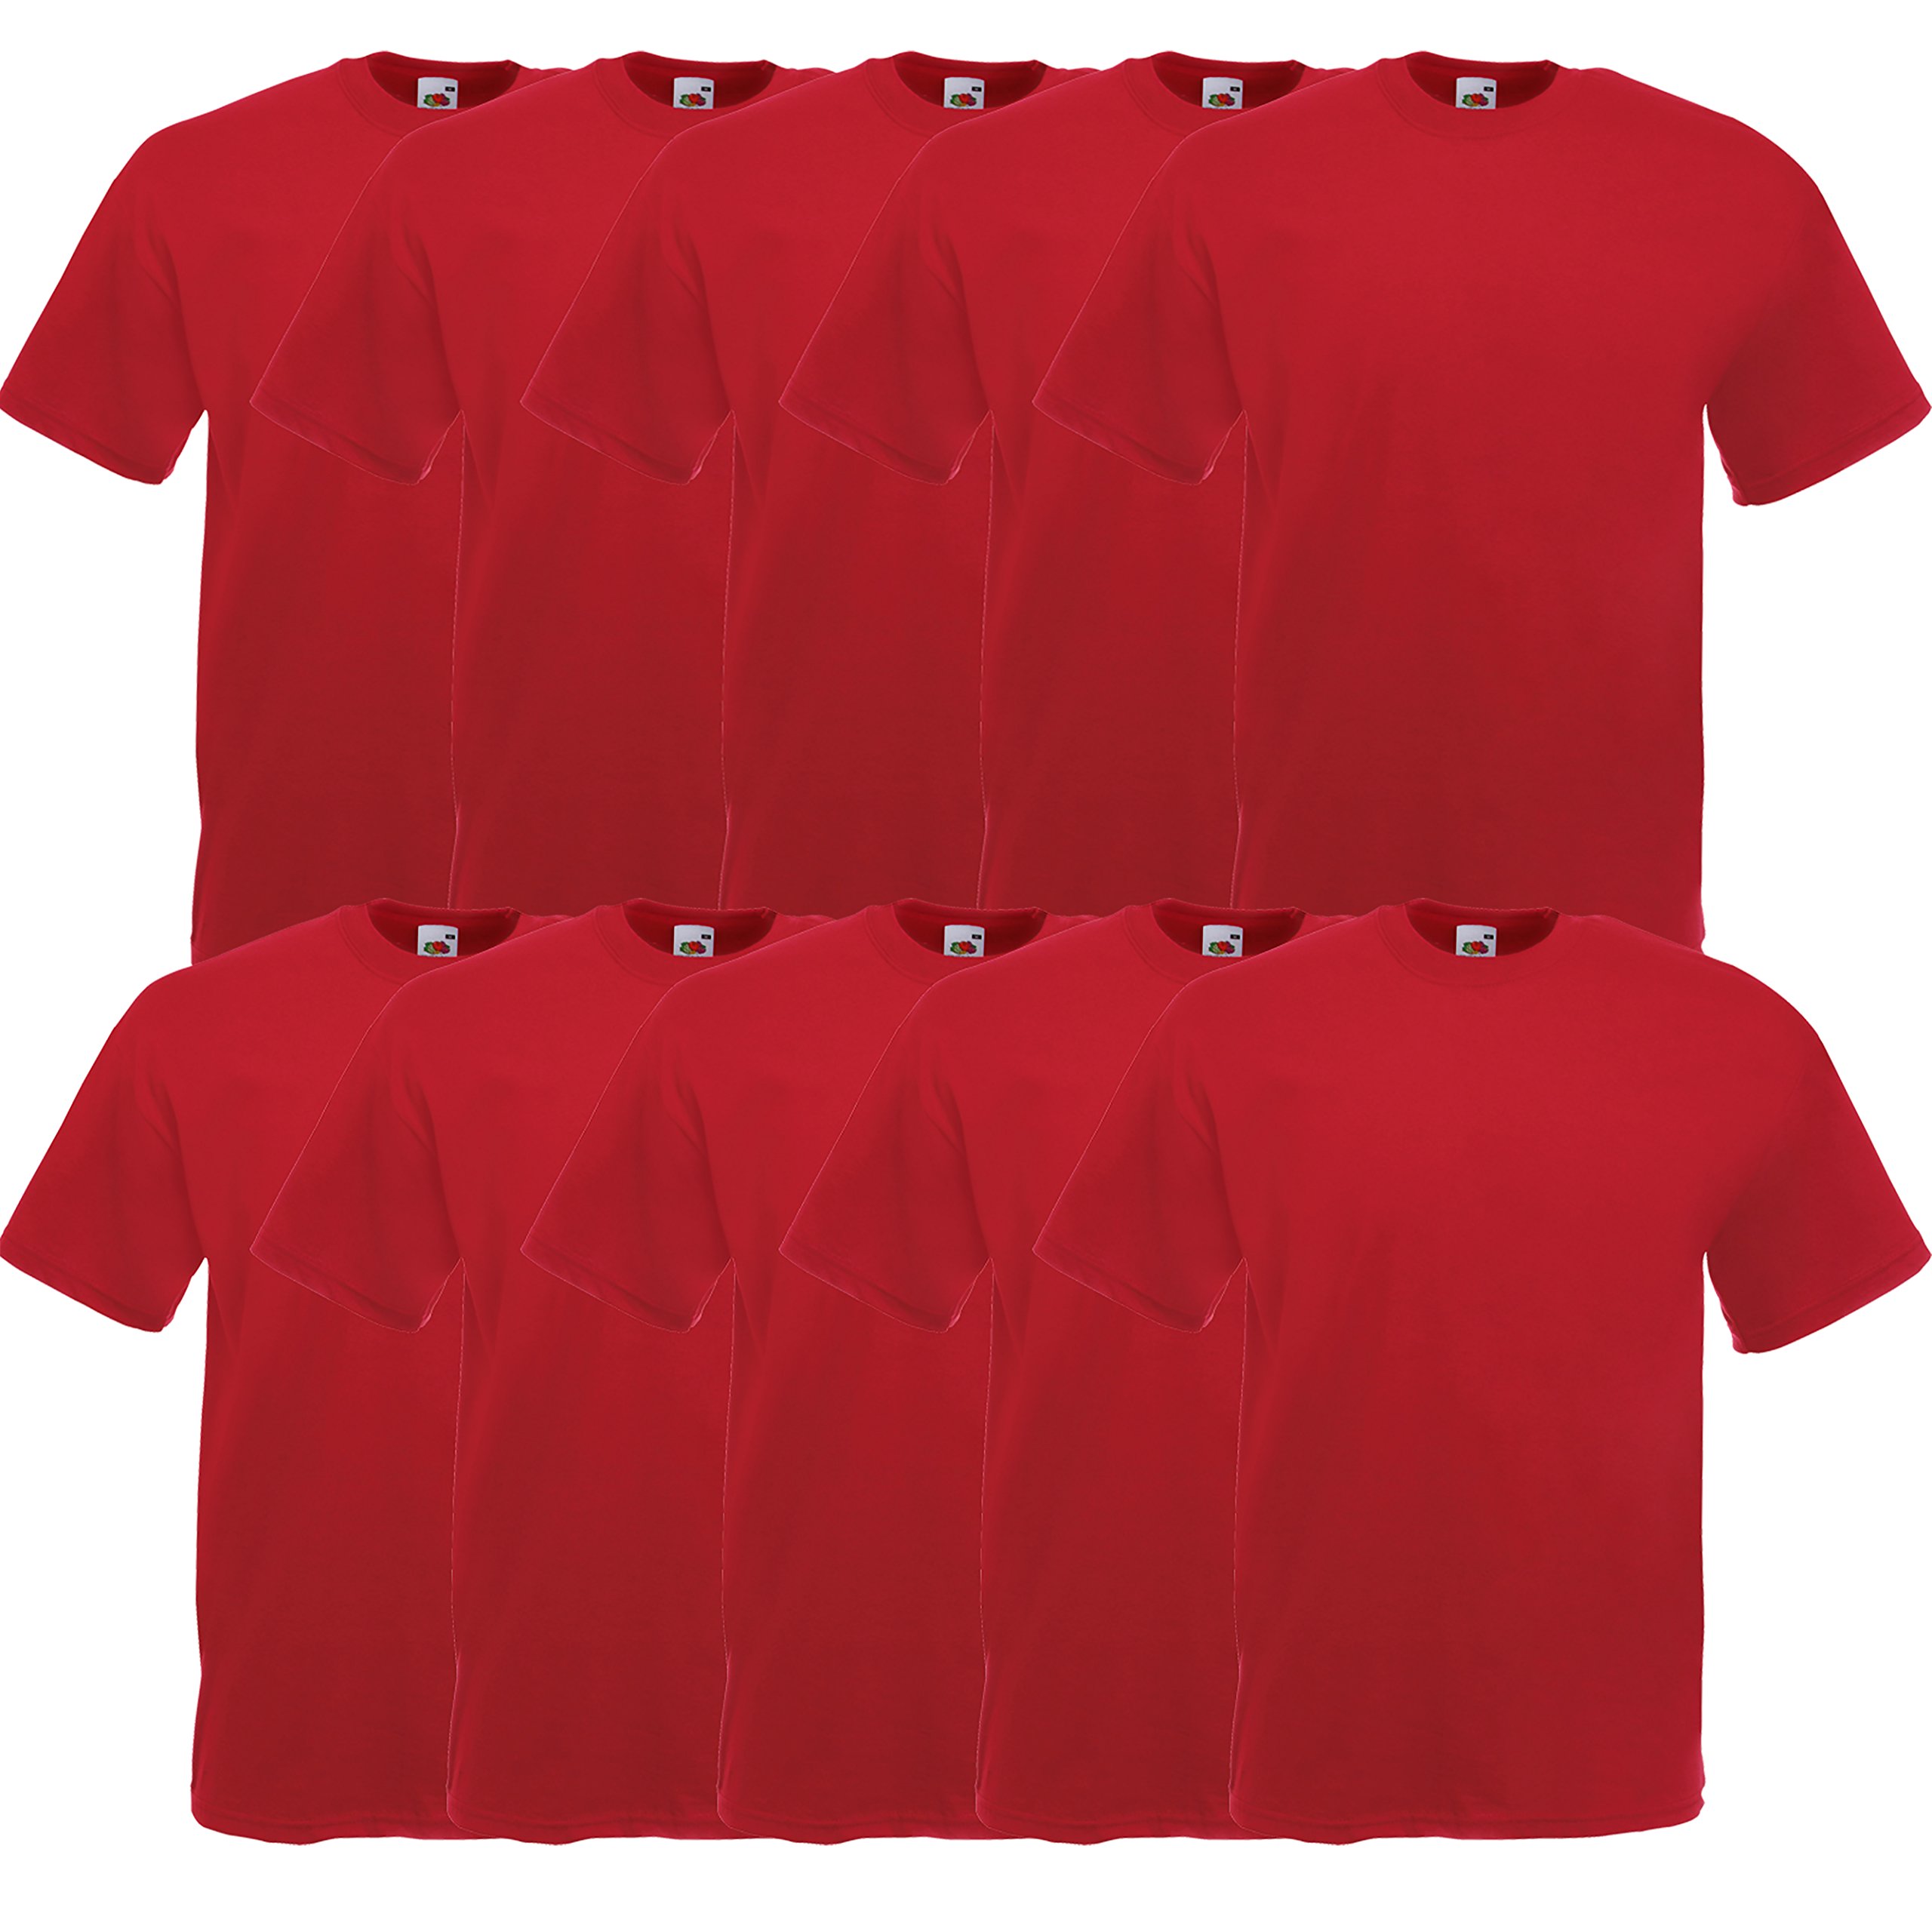 Fruit of the Loom 10er Pack Valueweight T-Shirt Größe S - 5XL T-Shirts in vielen Farben L,dunkelrot